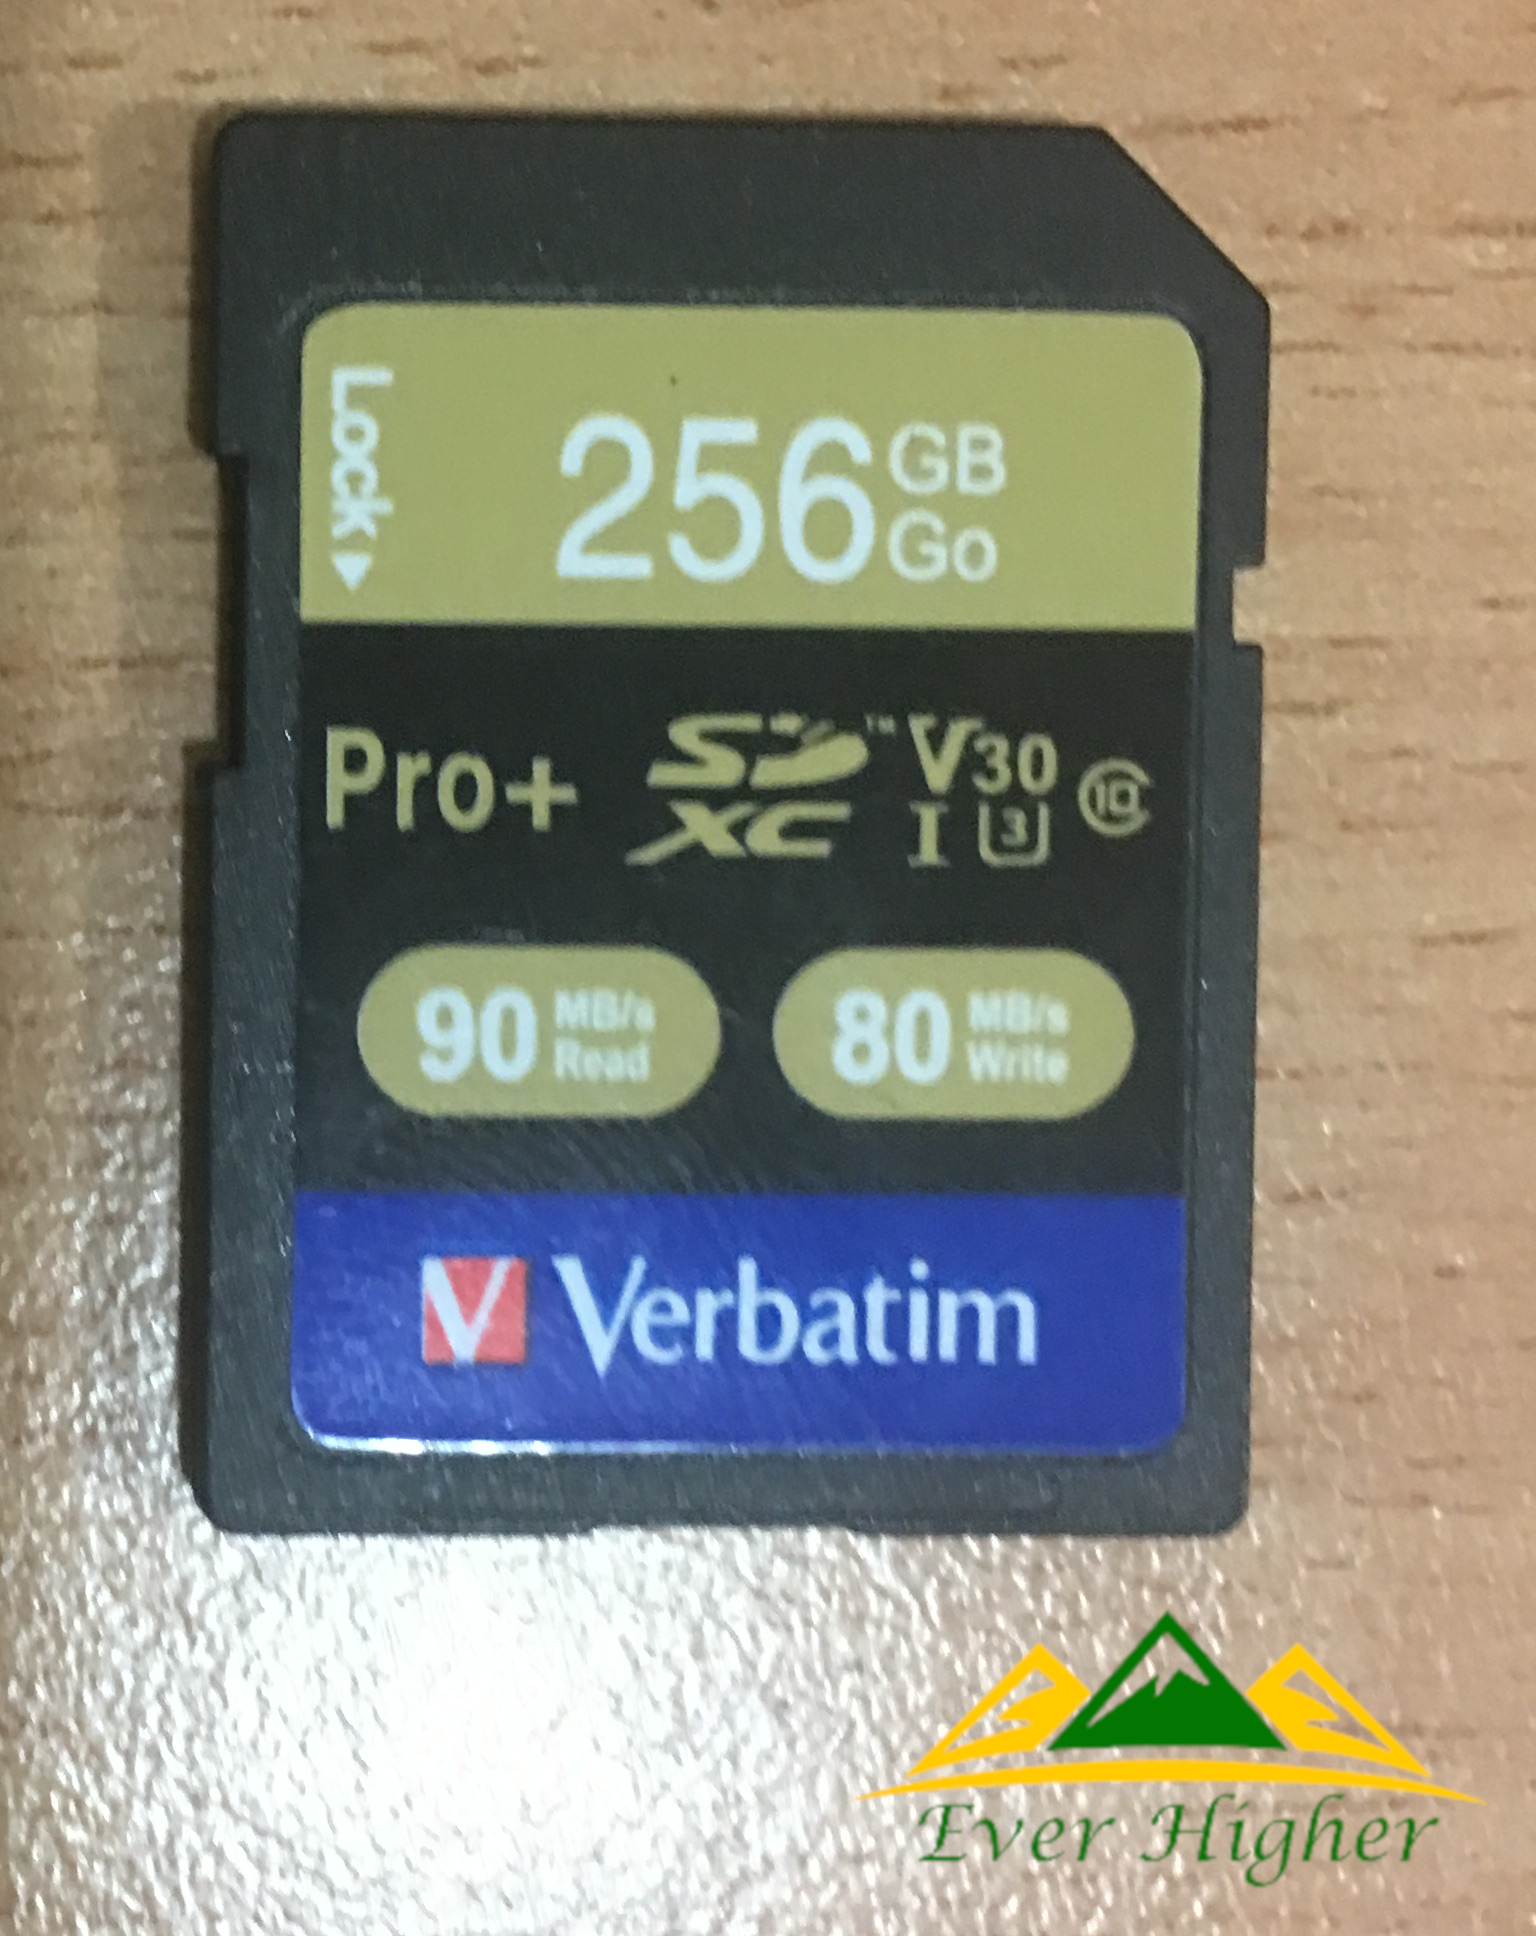 Verbatim 256GB SD Card Data Recovery_ Ever Higher In Singapore